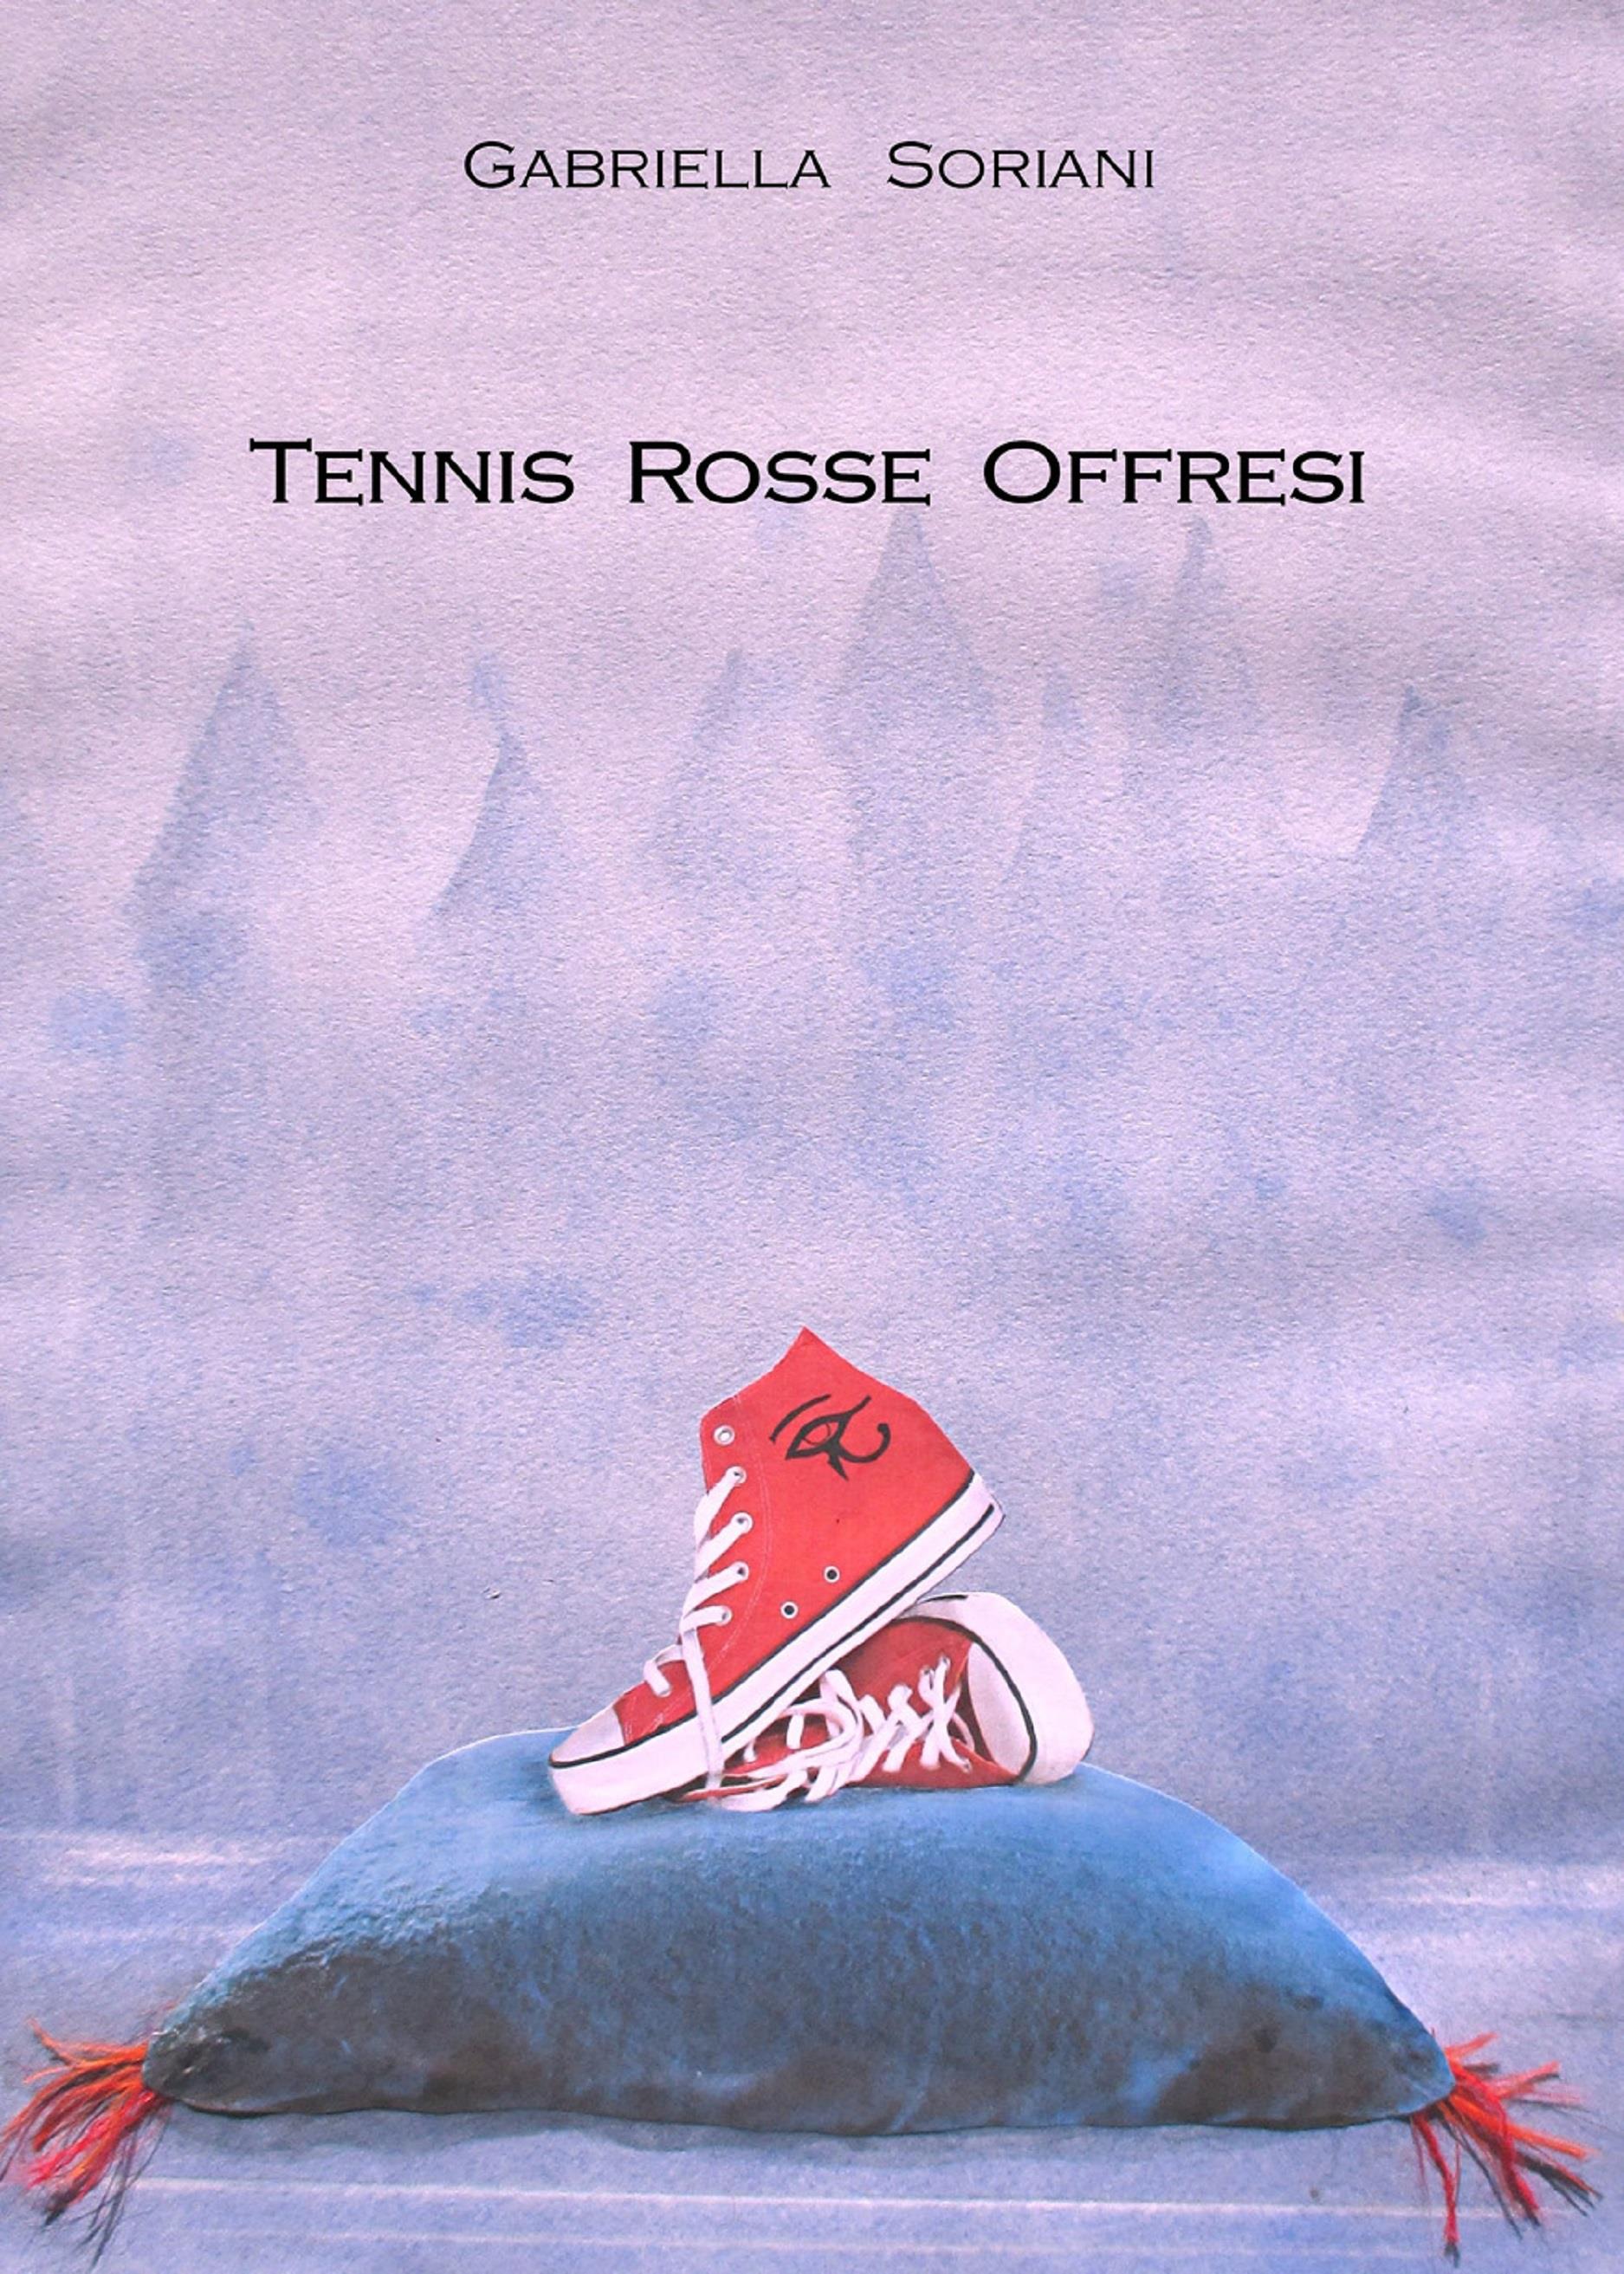 Tennis rosse offresi